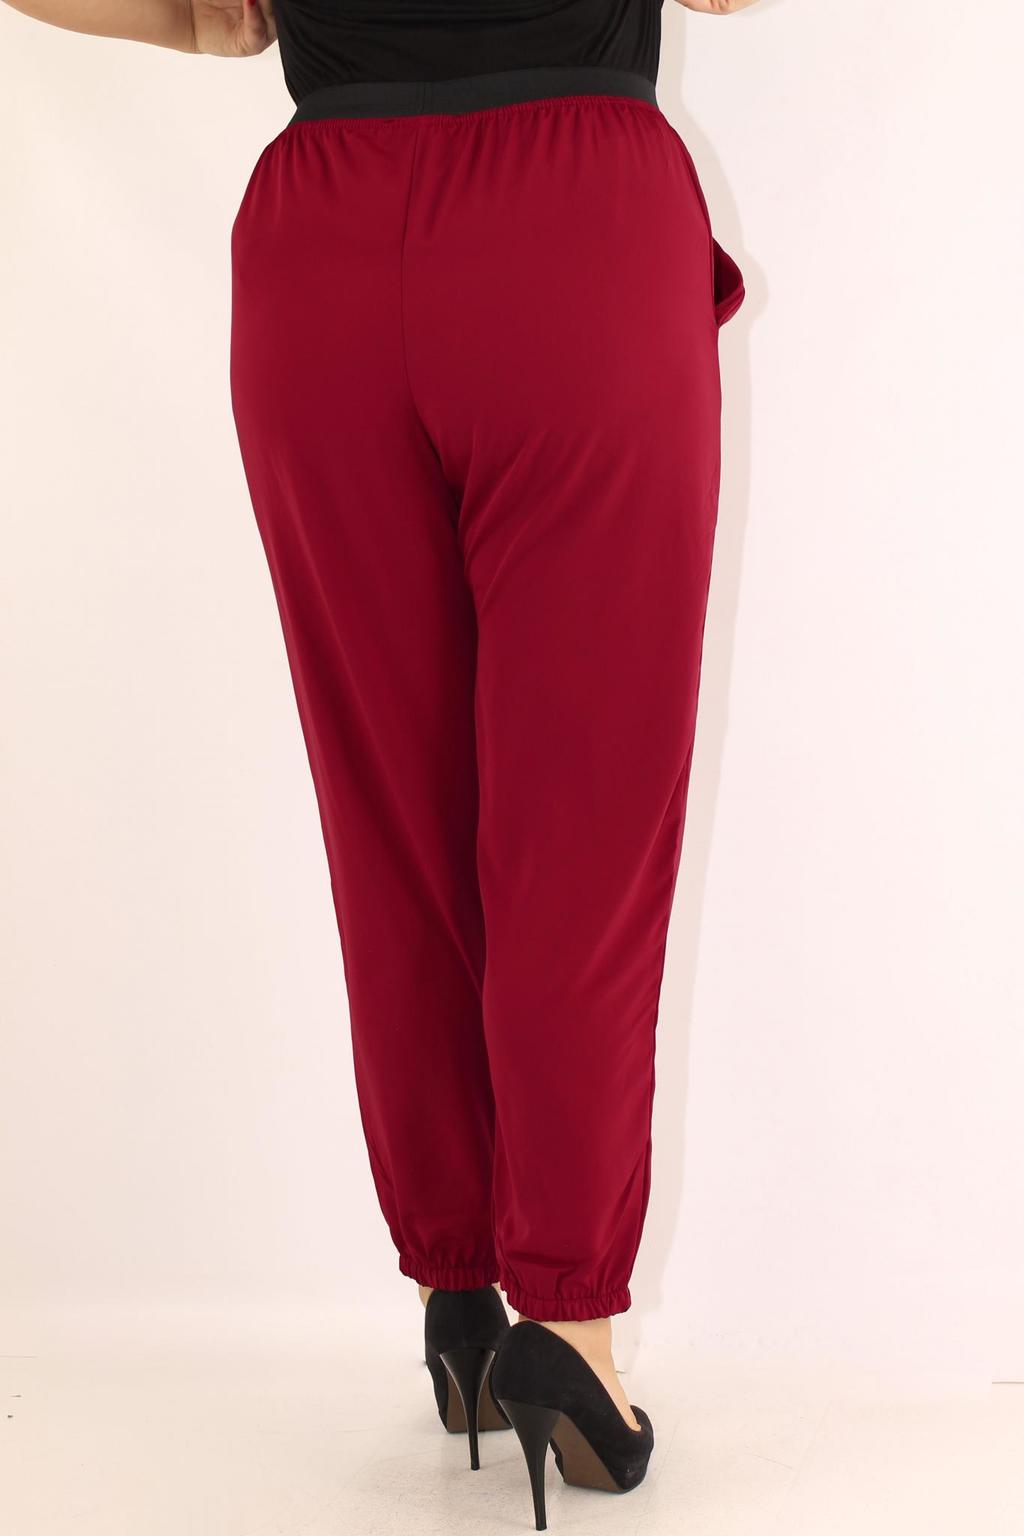 Buy Plus Size Women's Harem Pants Wholesale UK | Fashion-Book.com